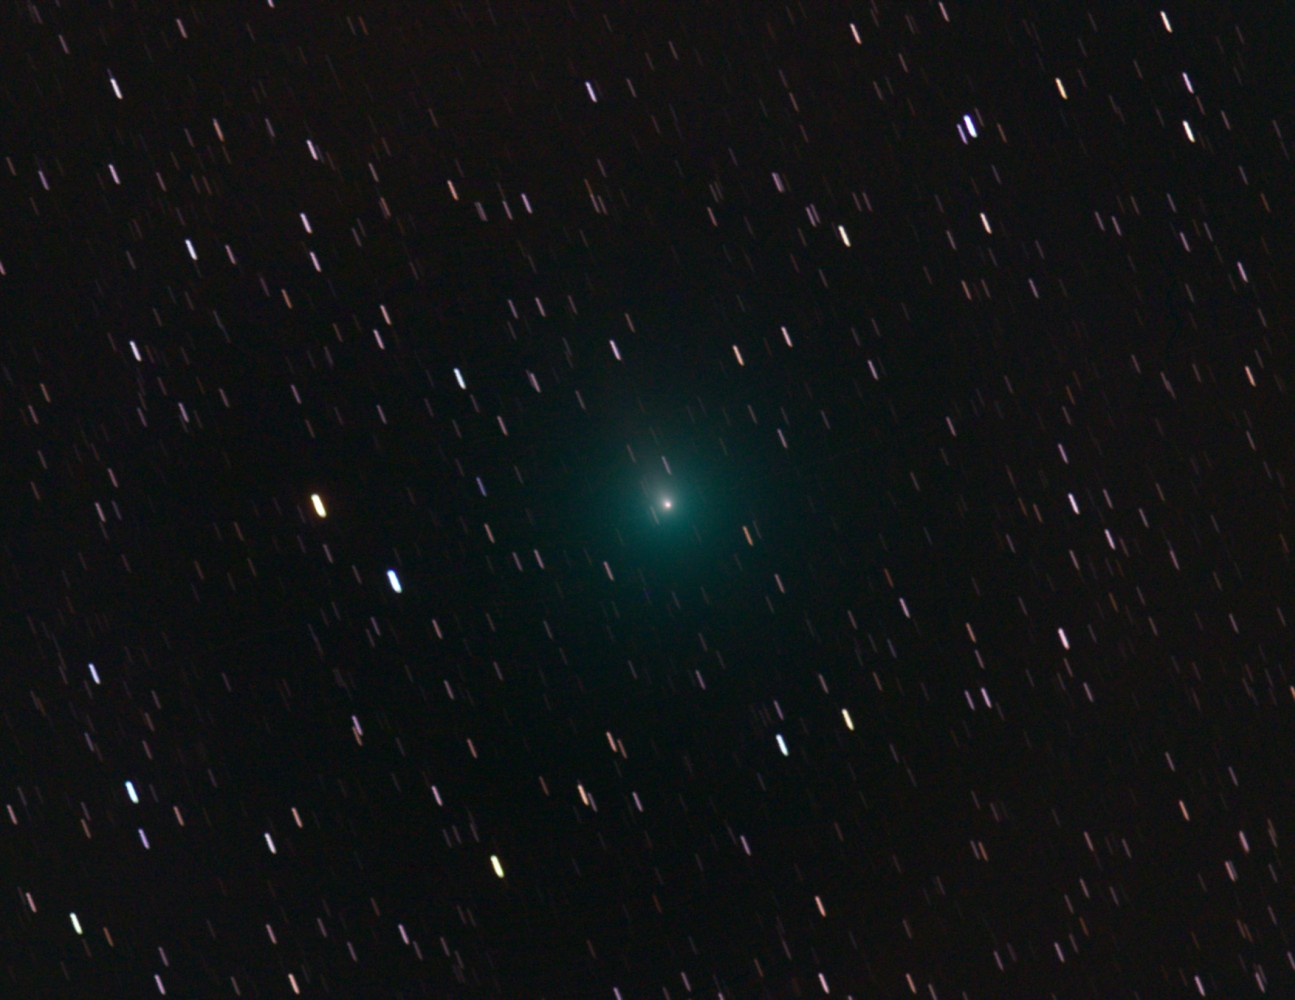 Komet Wirtanen am 28. November 2018